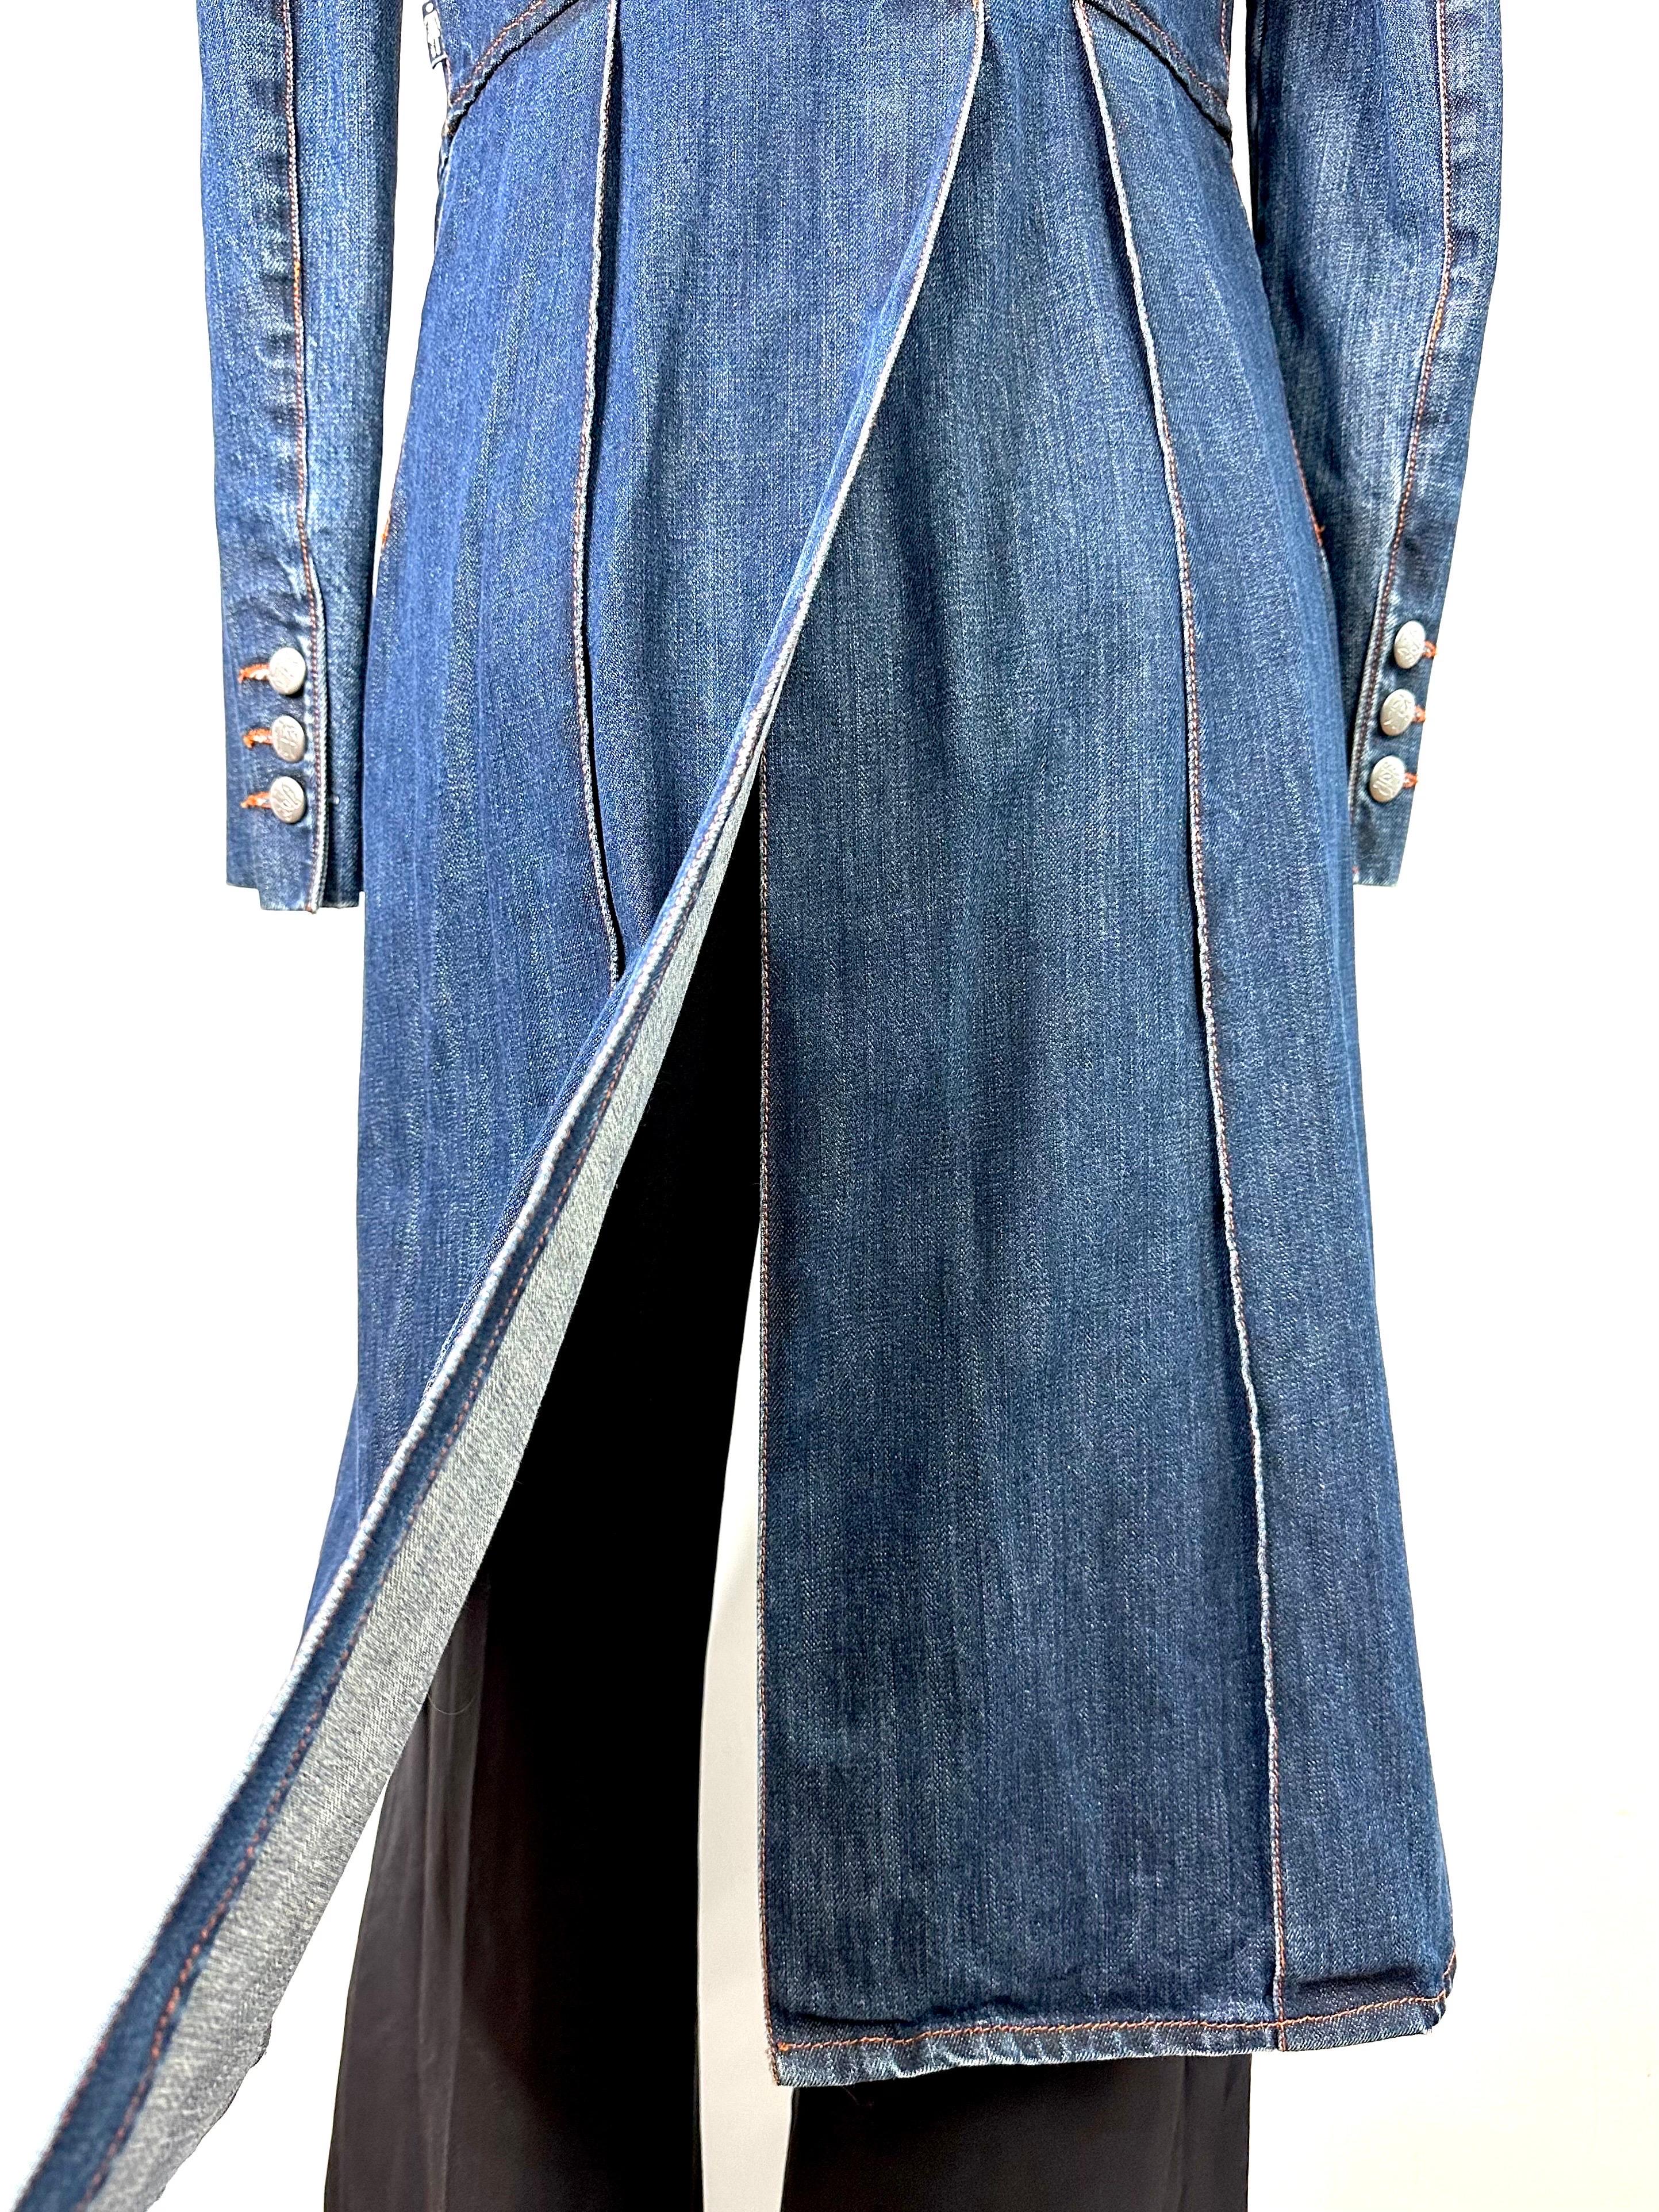 Jean Paul Gaultier vintage jeans tails jacket For Sale 4